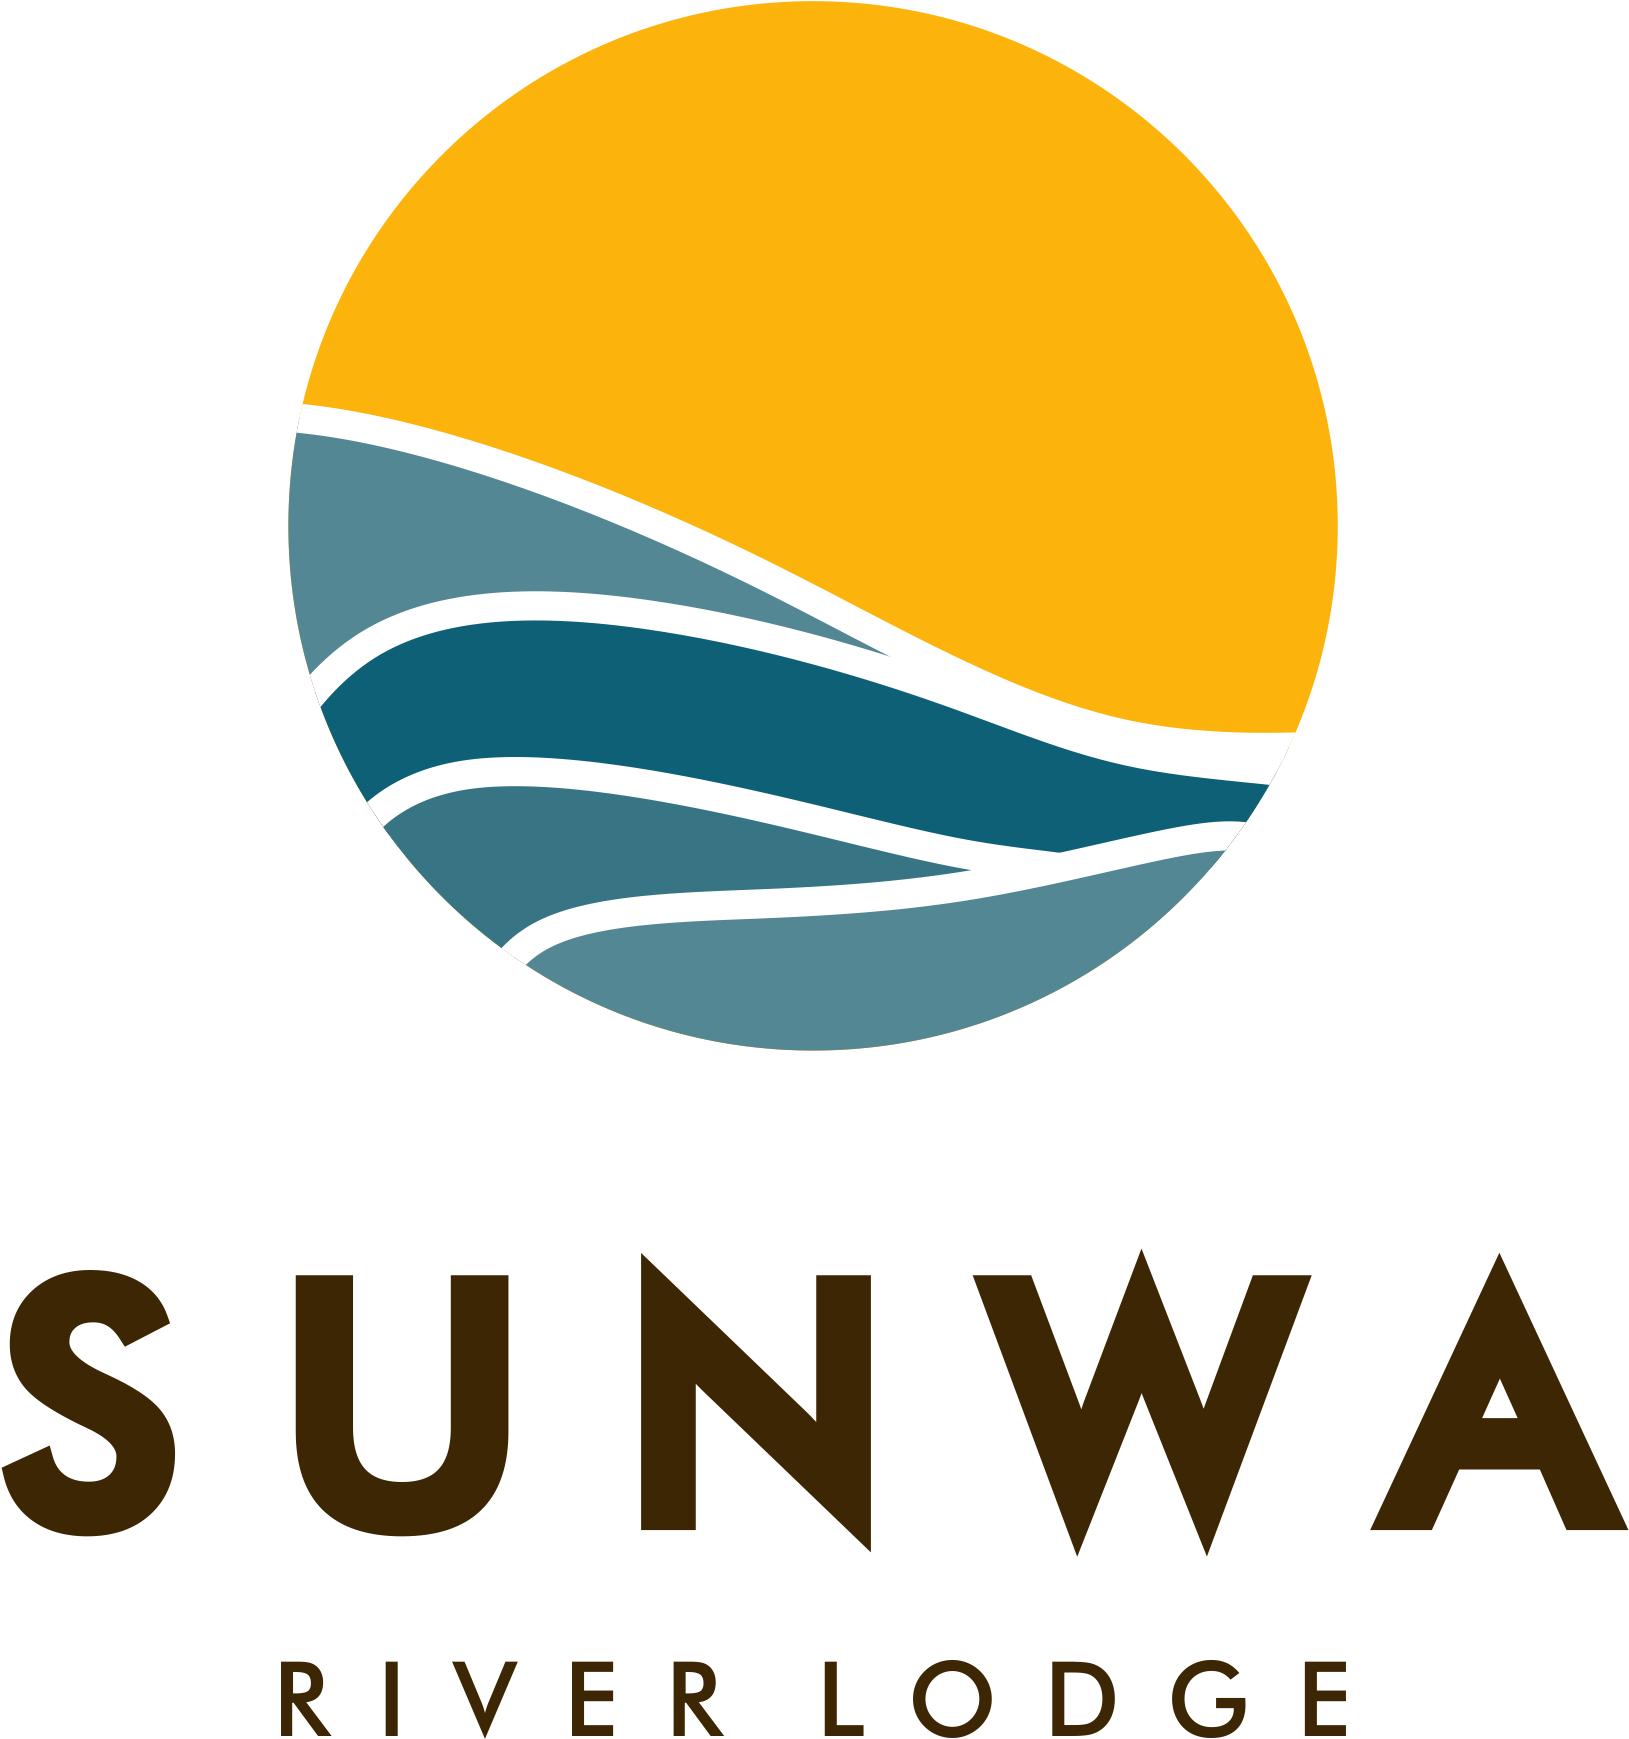 Sunwa River Lodge - Graphic Design (2201x2238), Png Download